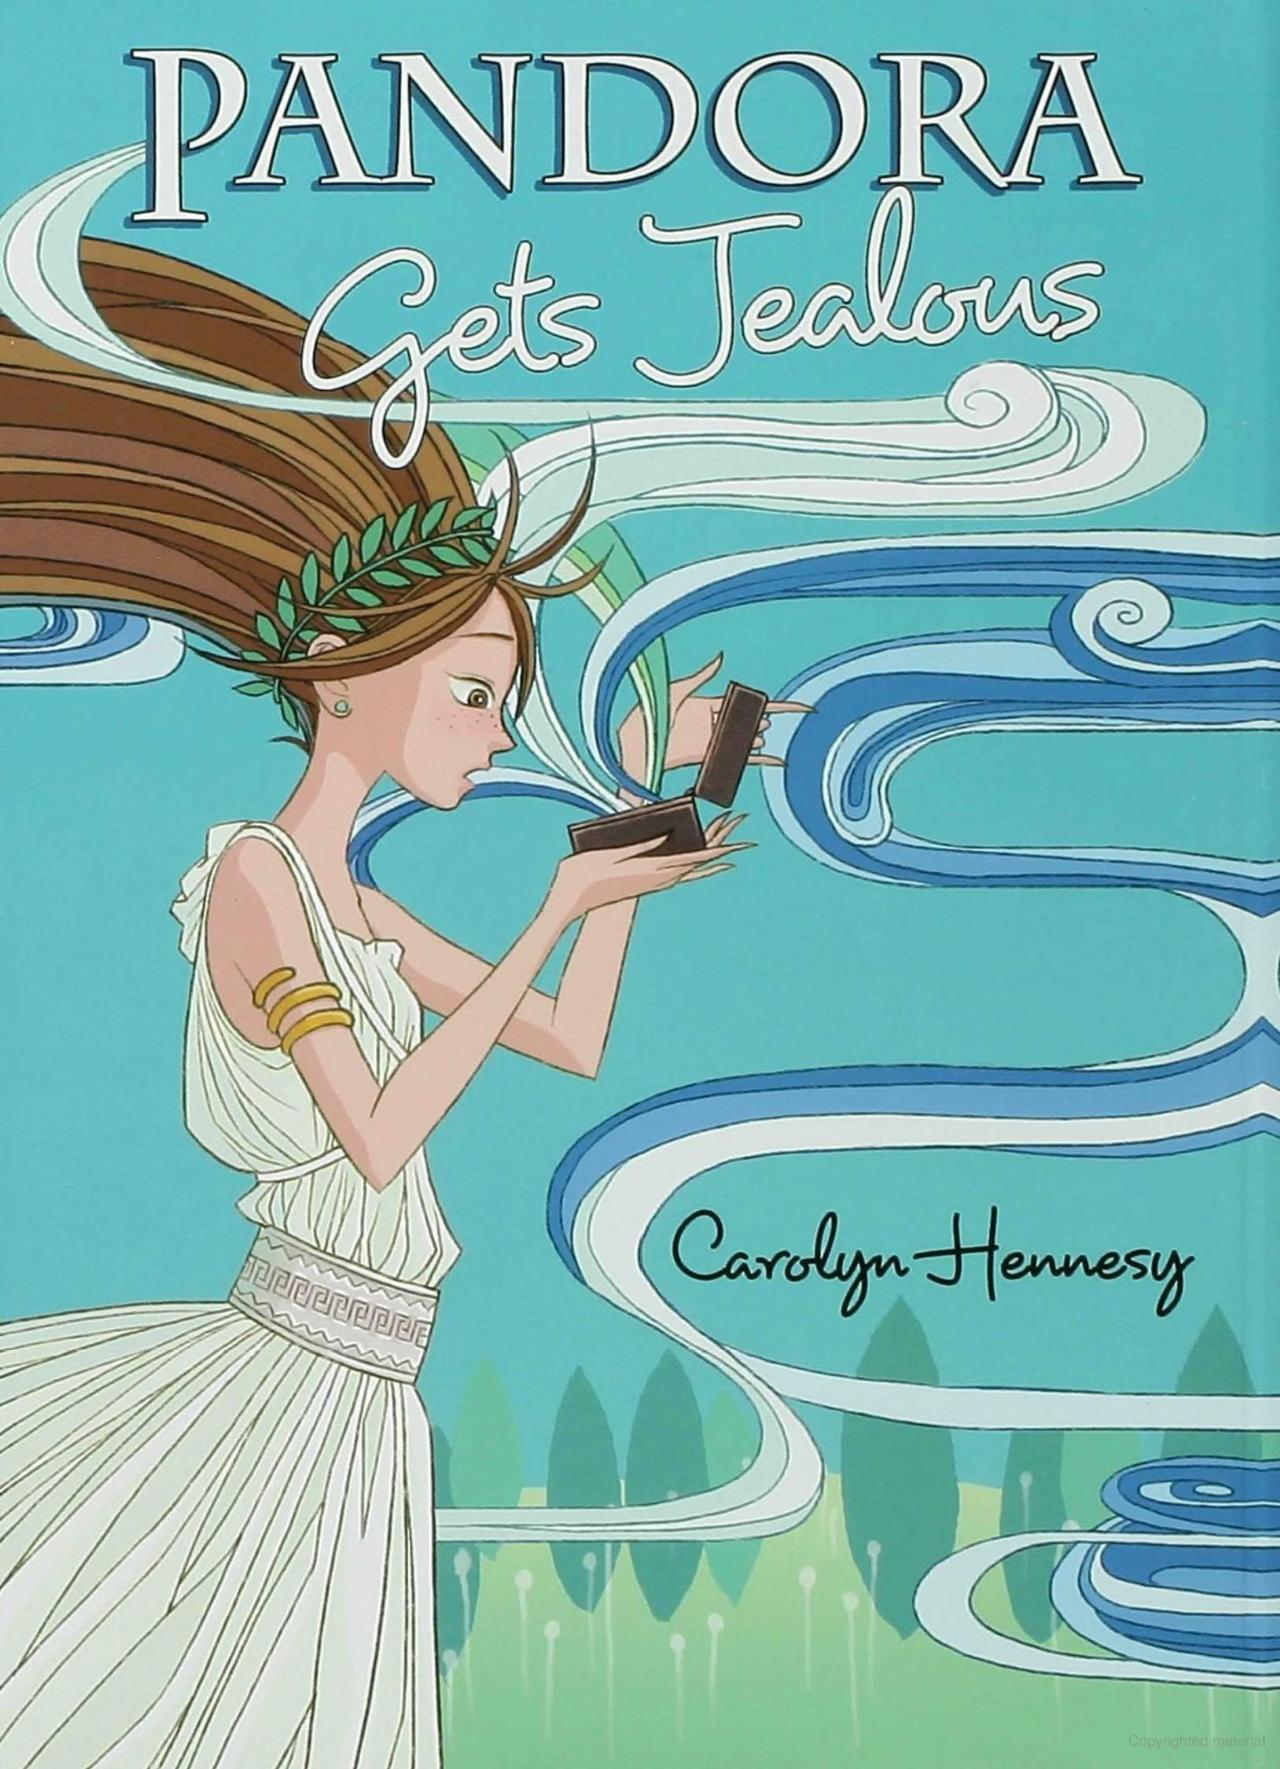 'Pandora Gets Jealous' by Carolyn Hennesy